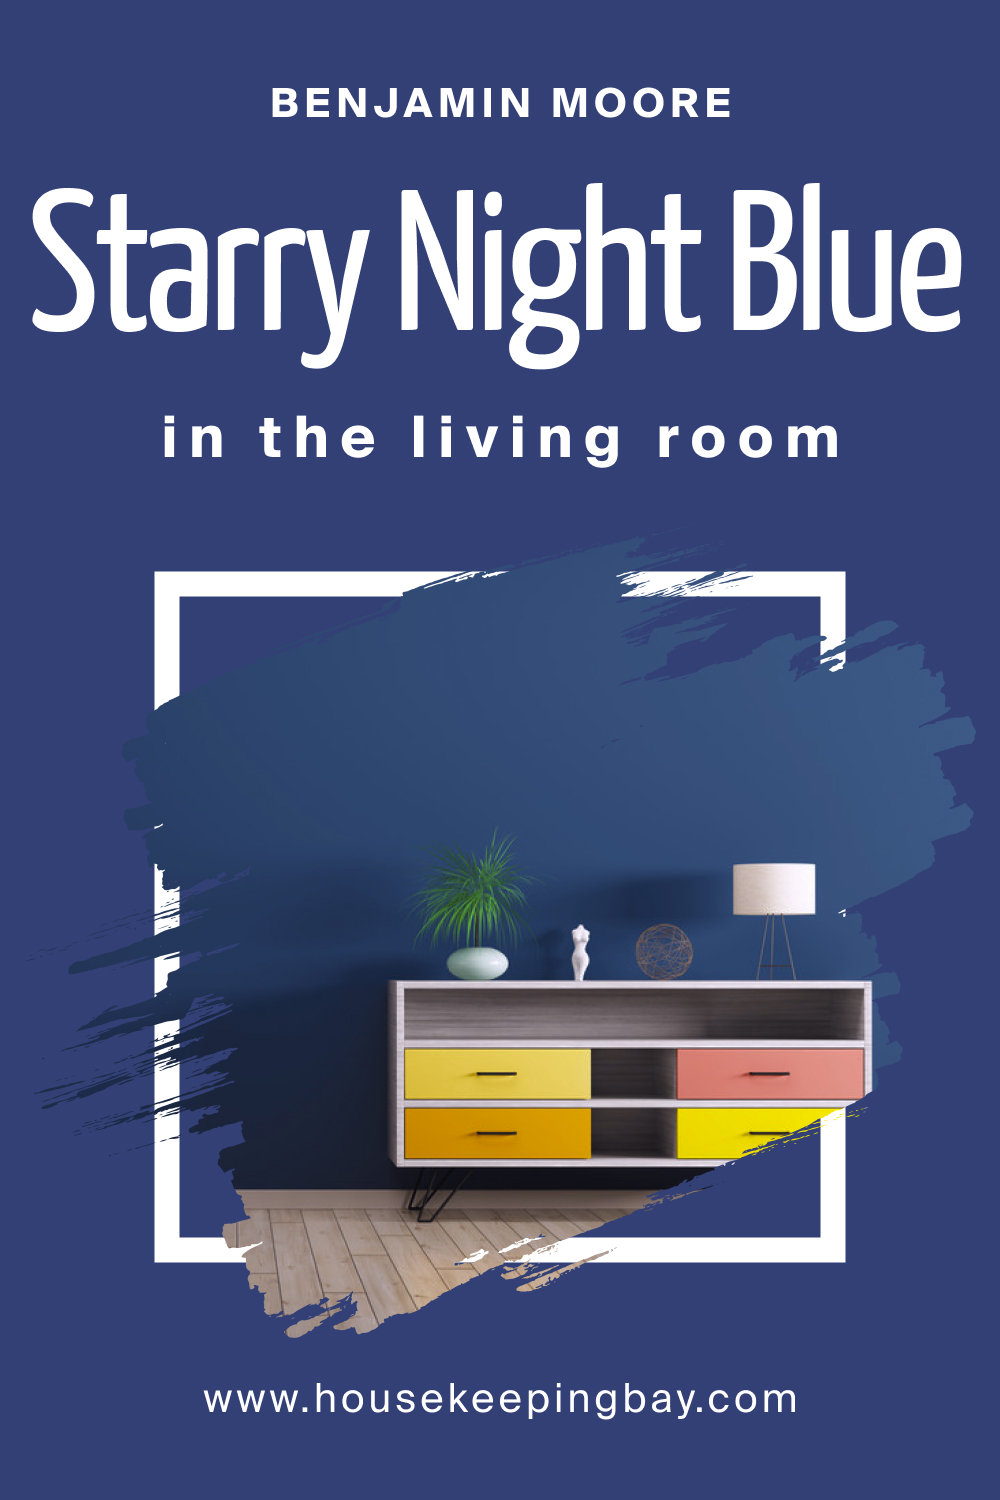 Benjamin Moore. Starry Night Blue 2067 20 in the Living Room